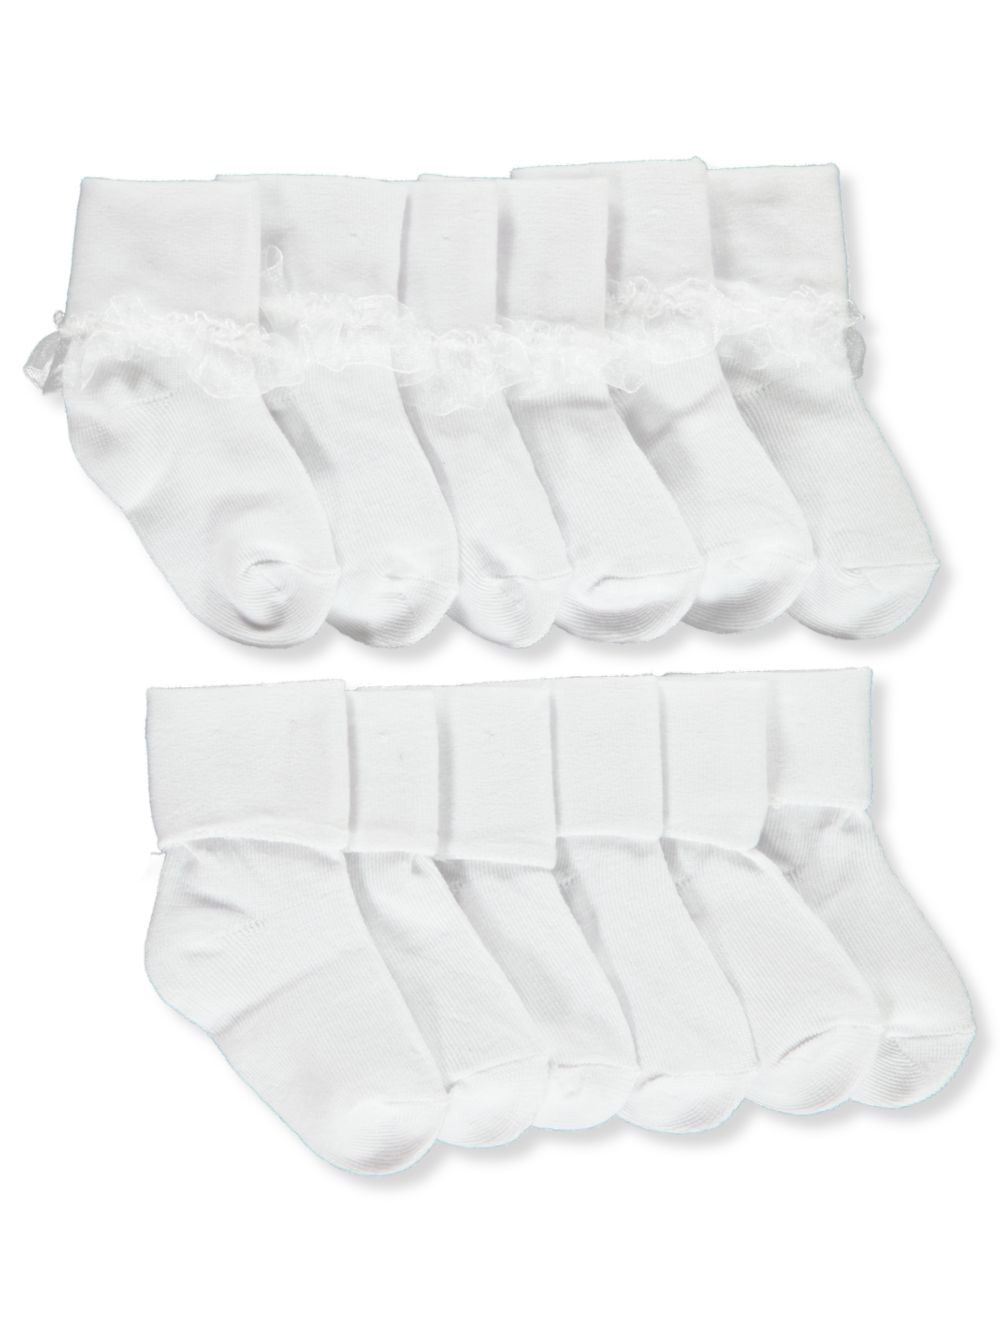 White and Multicolor Socks